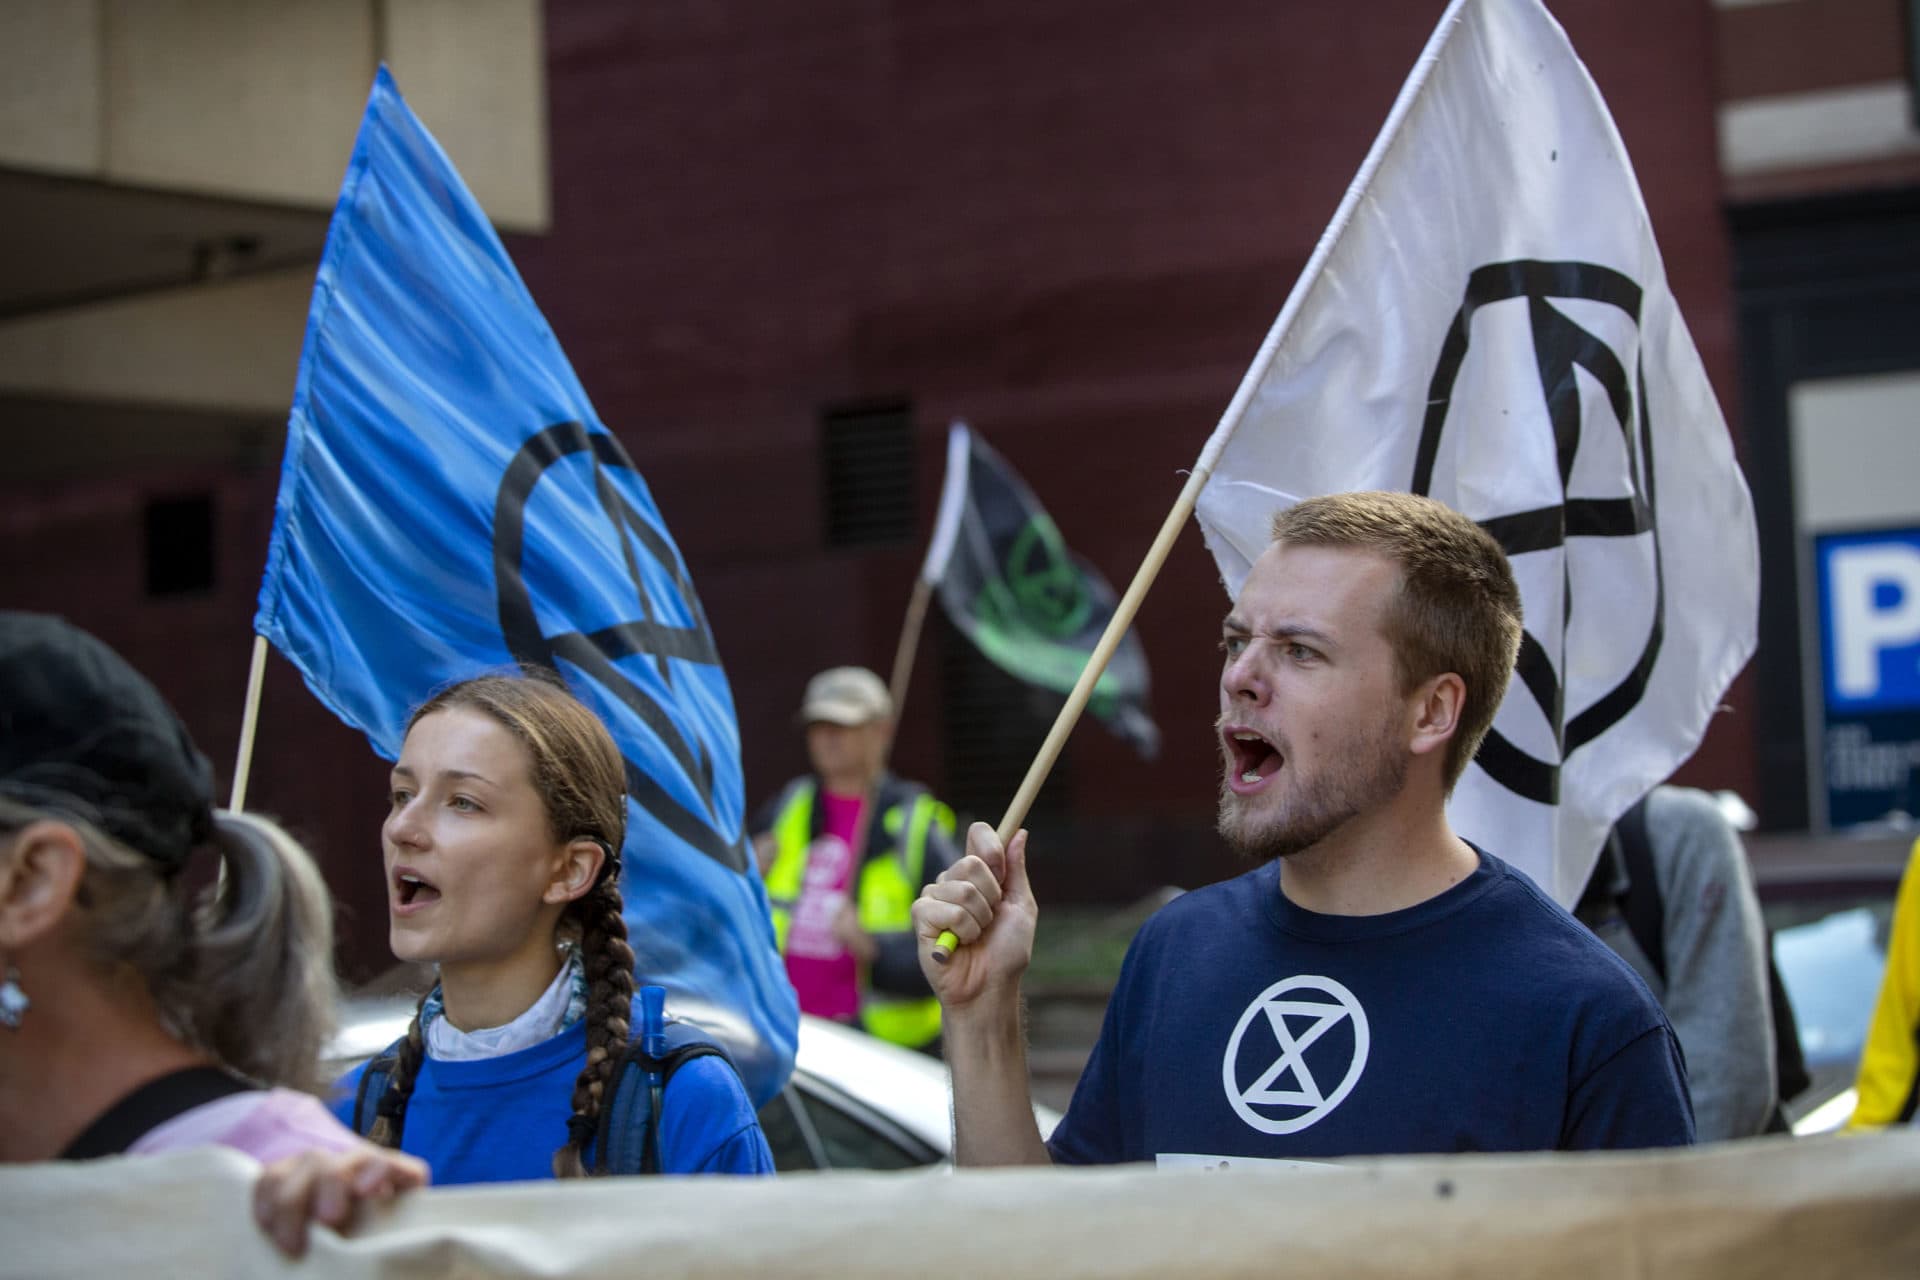 Extinction Rebellion protesters walk along Pearl St. in downtown Boston. (Robin Lubbock/WBUR)